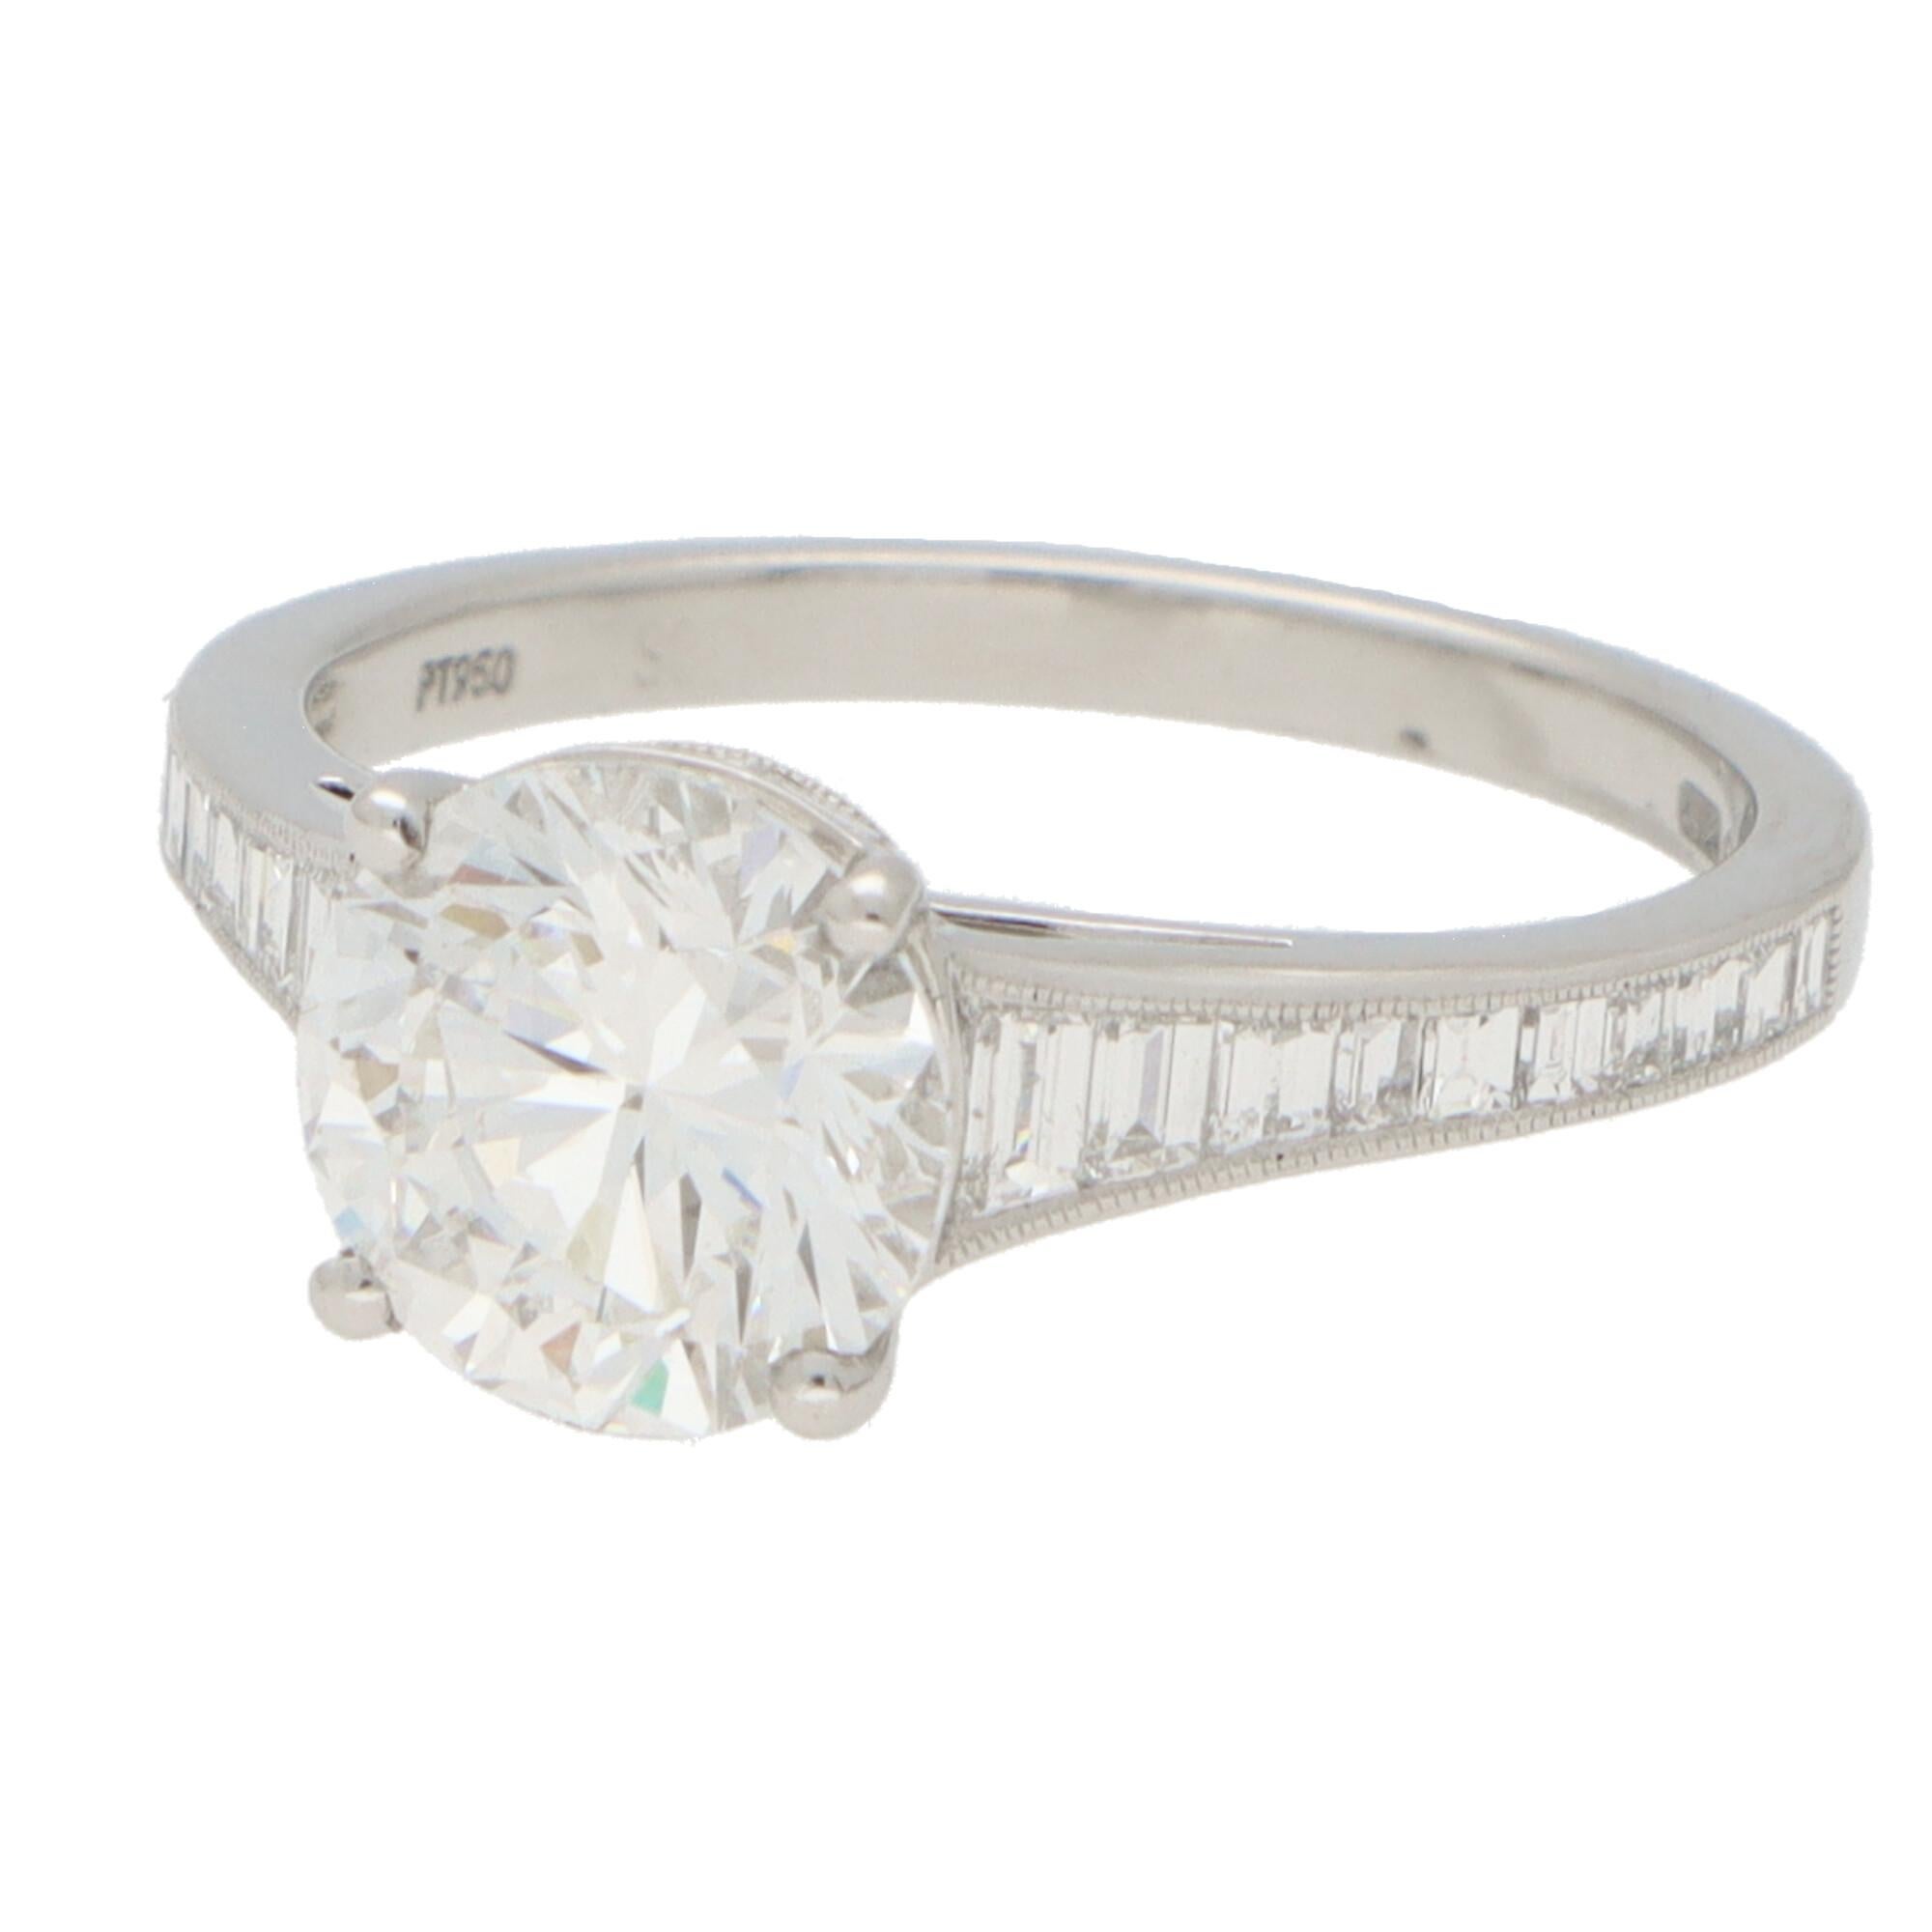 Women's or Men's GIA Certified Art Deco Inspired Diamond Engagement Ring Set in Platinum